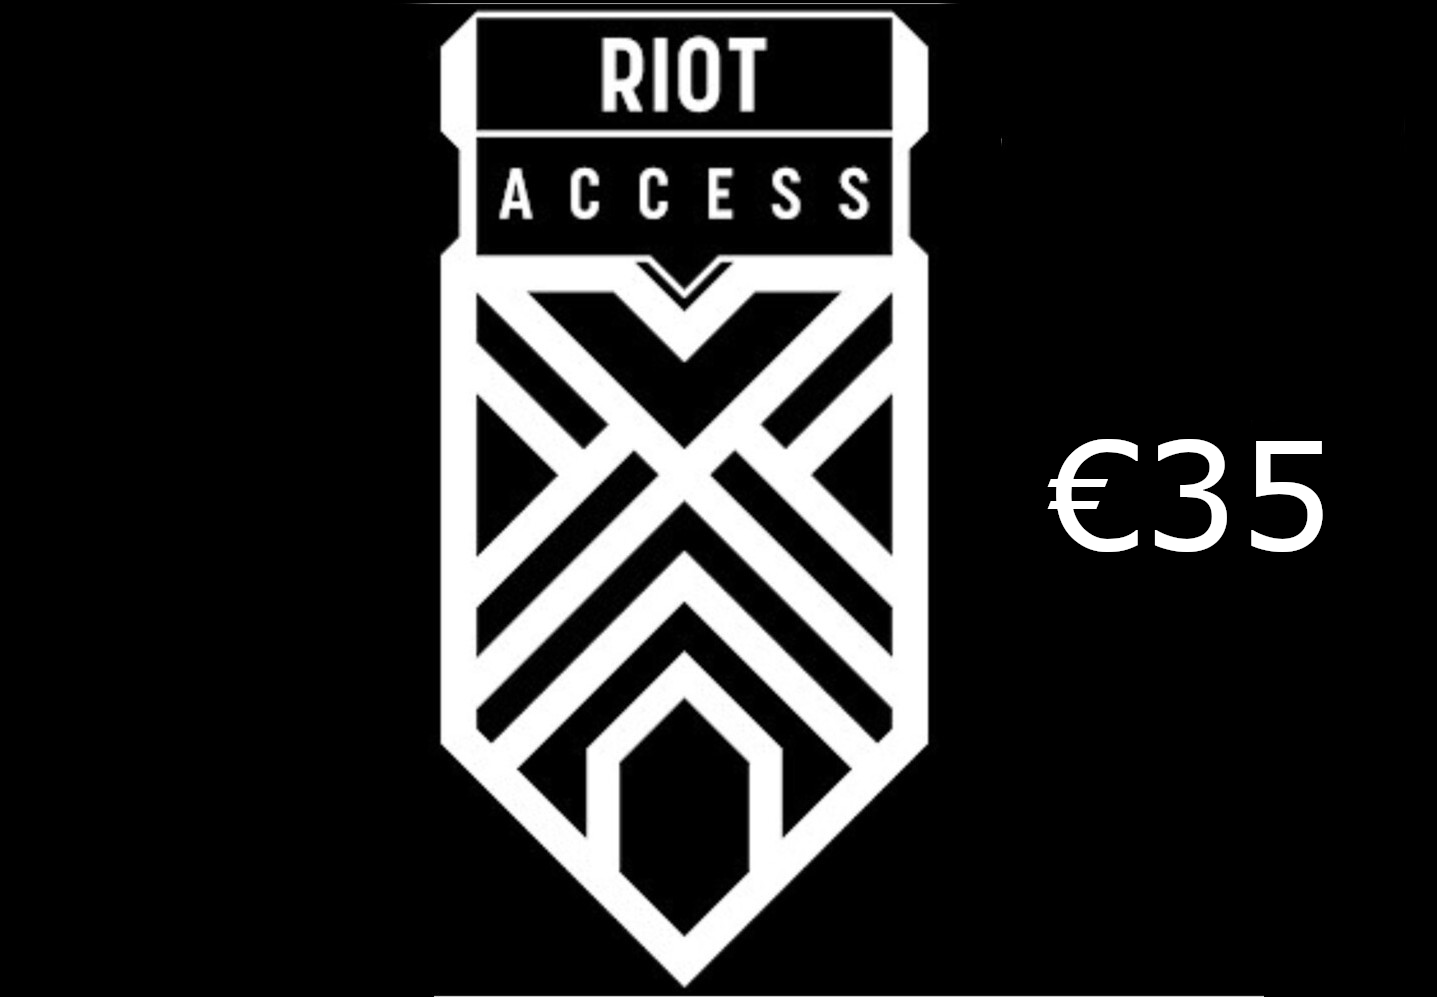 Riot Access €35 Code EU